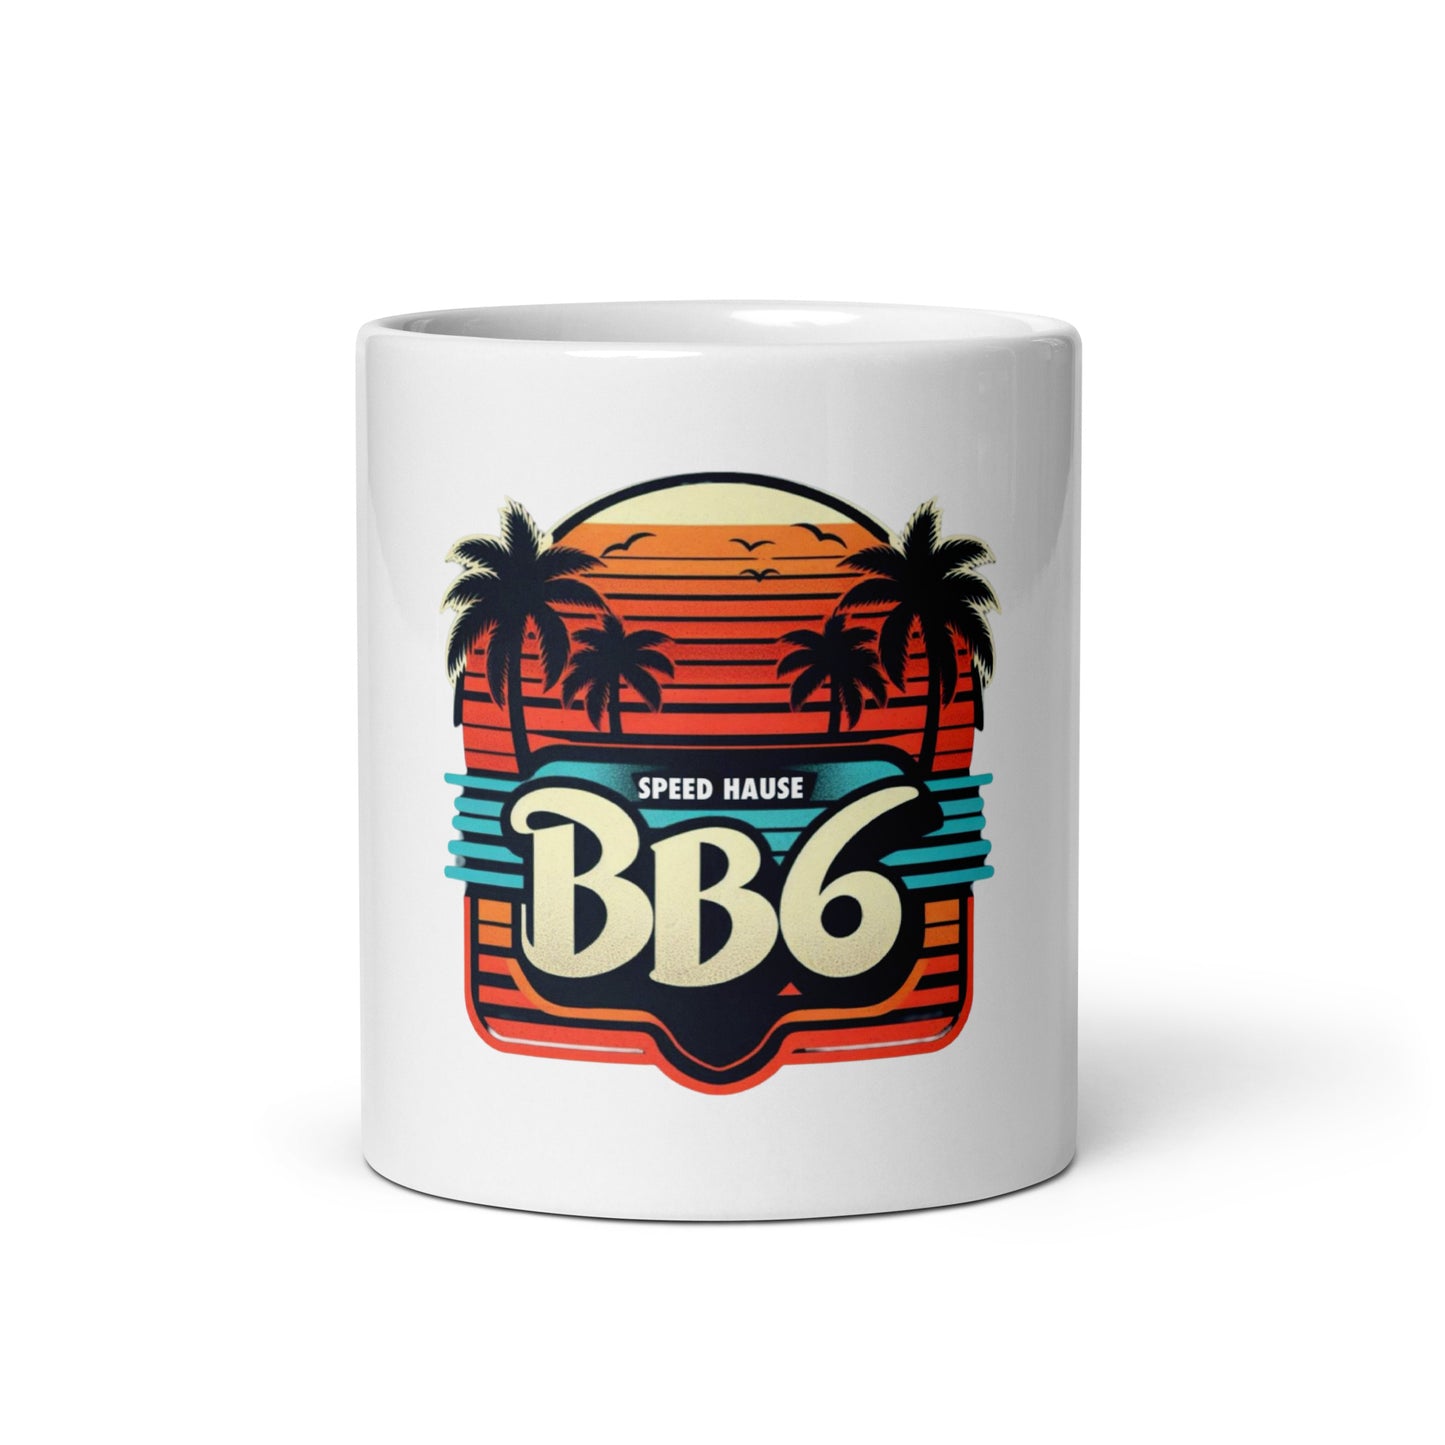 BB6 glossy mug